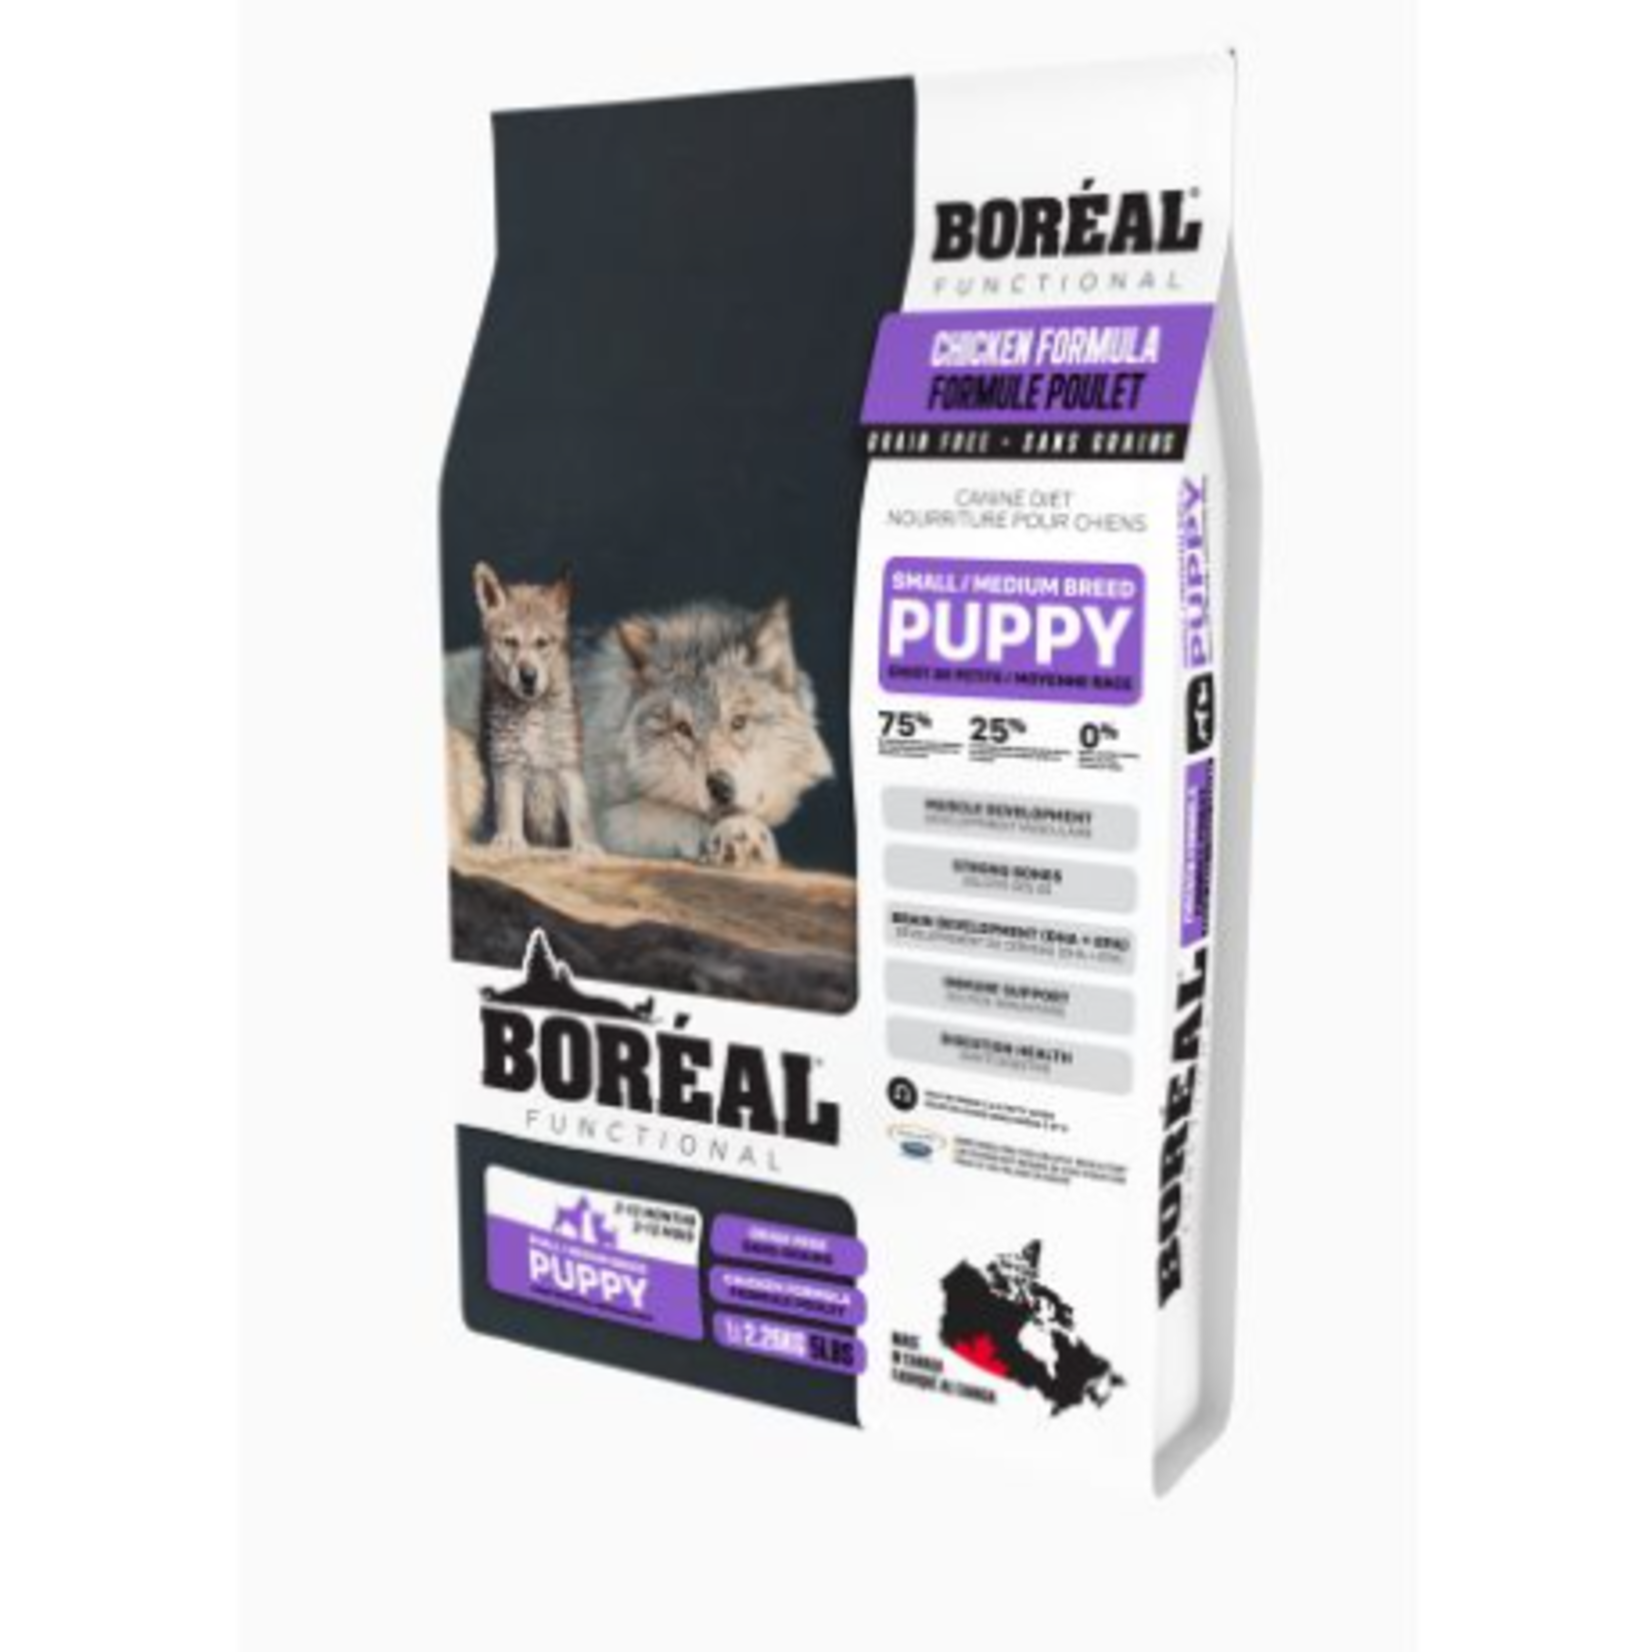 Boréal Functional - Chicken - Puppy Food - Small & Medium Breeds - G free - 2.26kg